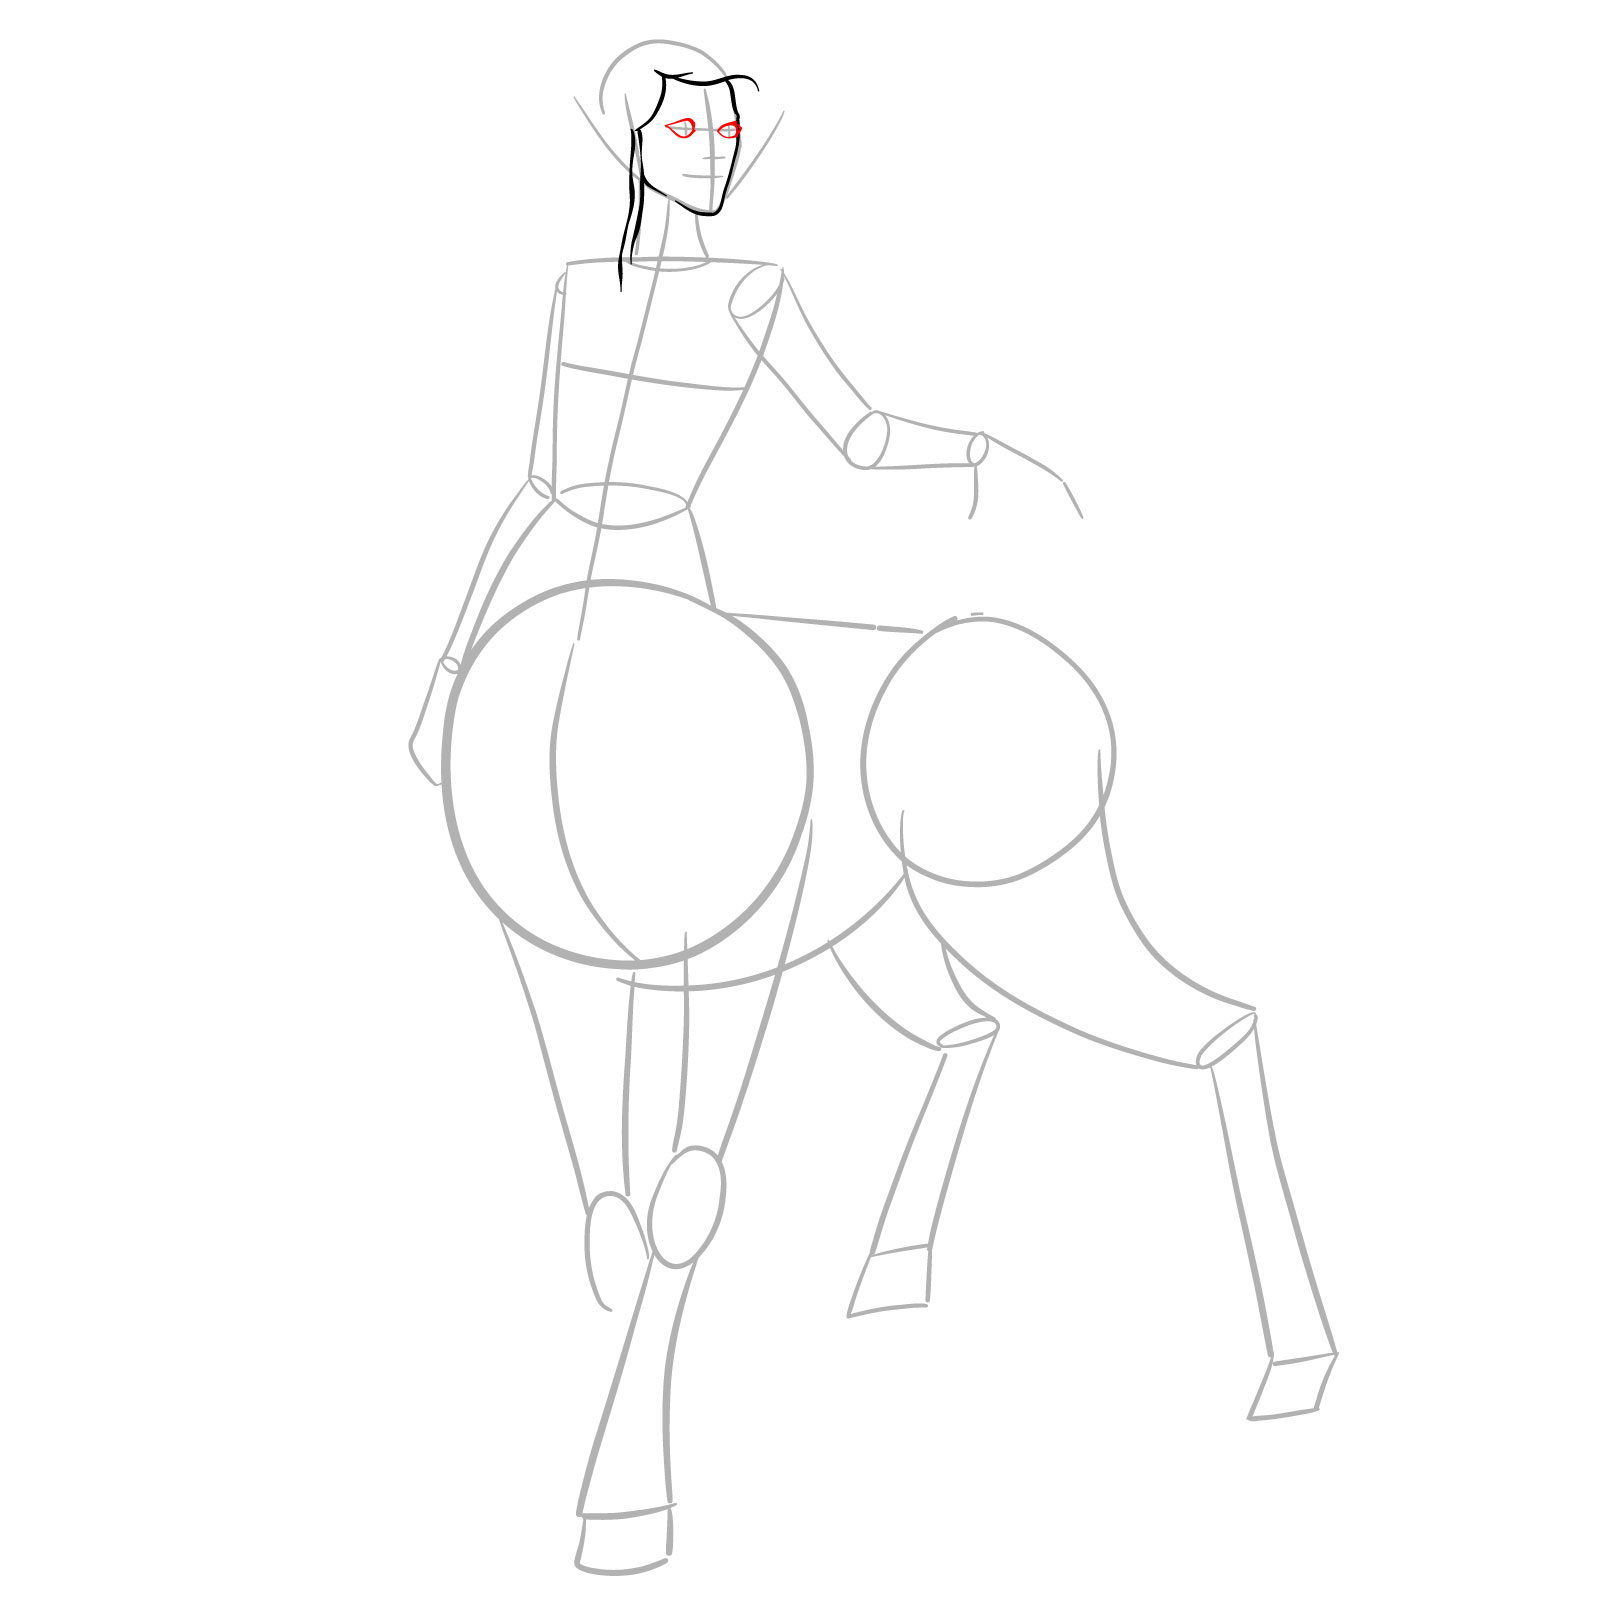 How to draw a Female Centaur - step 07